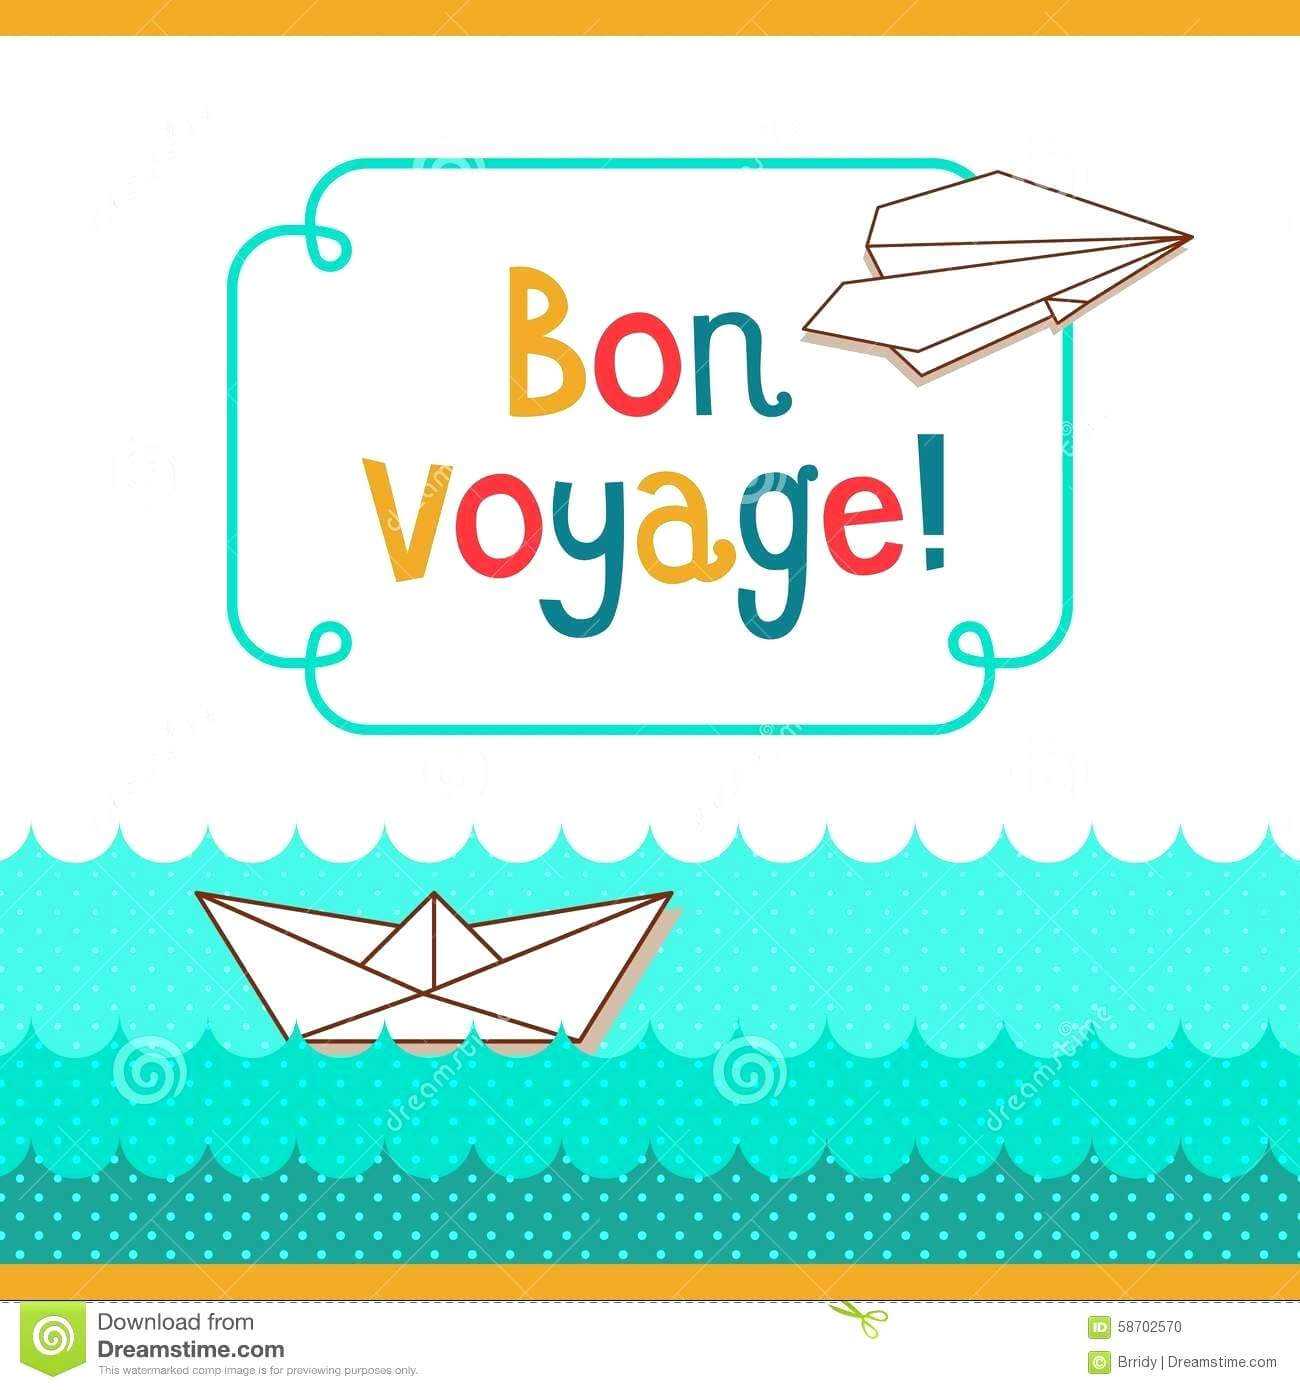 bon-voyage-card-template-atlantaauctionco